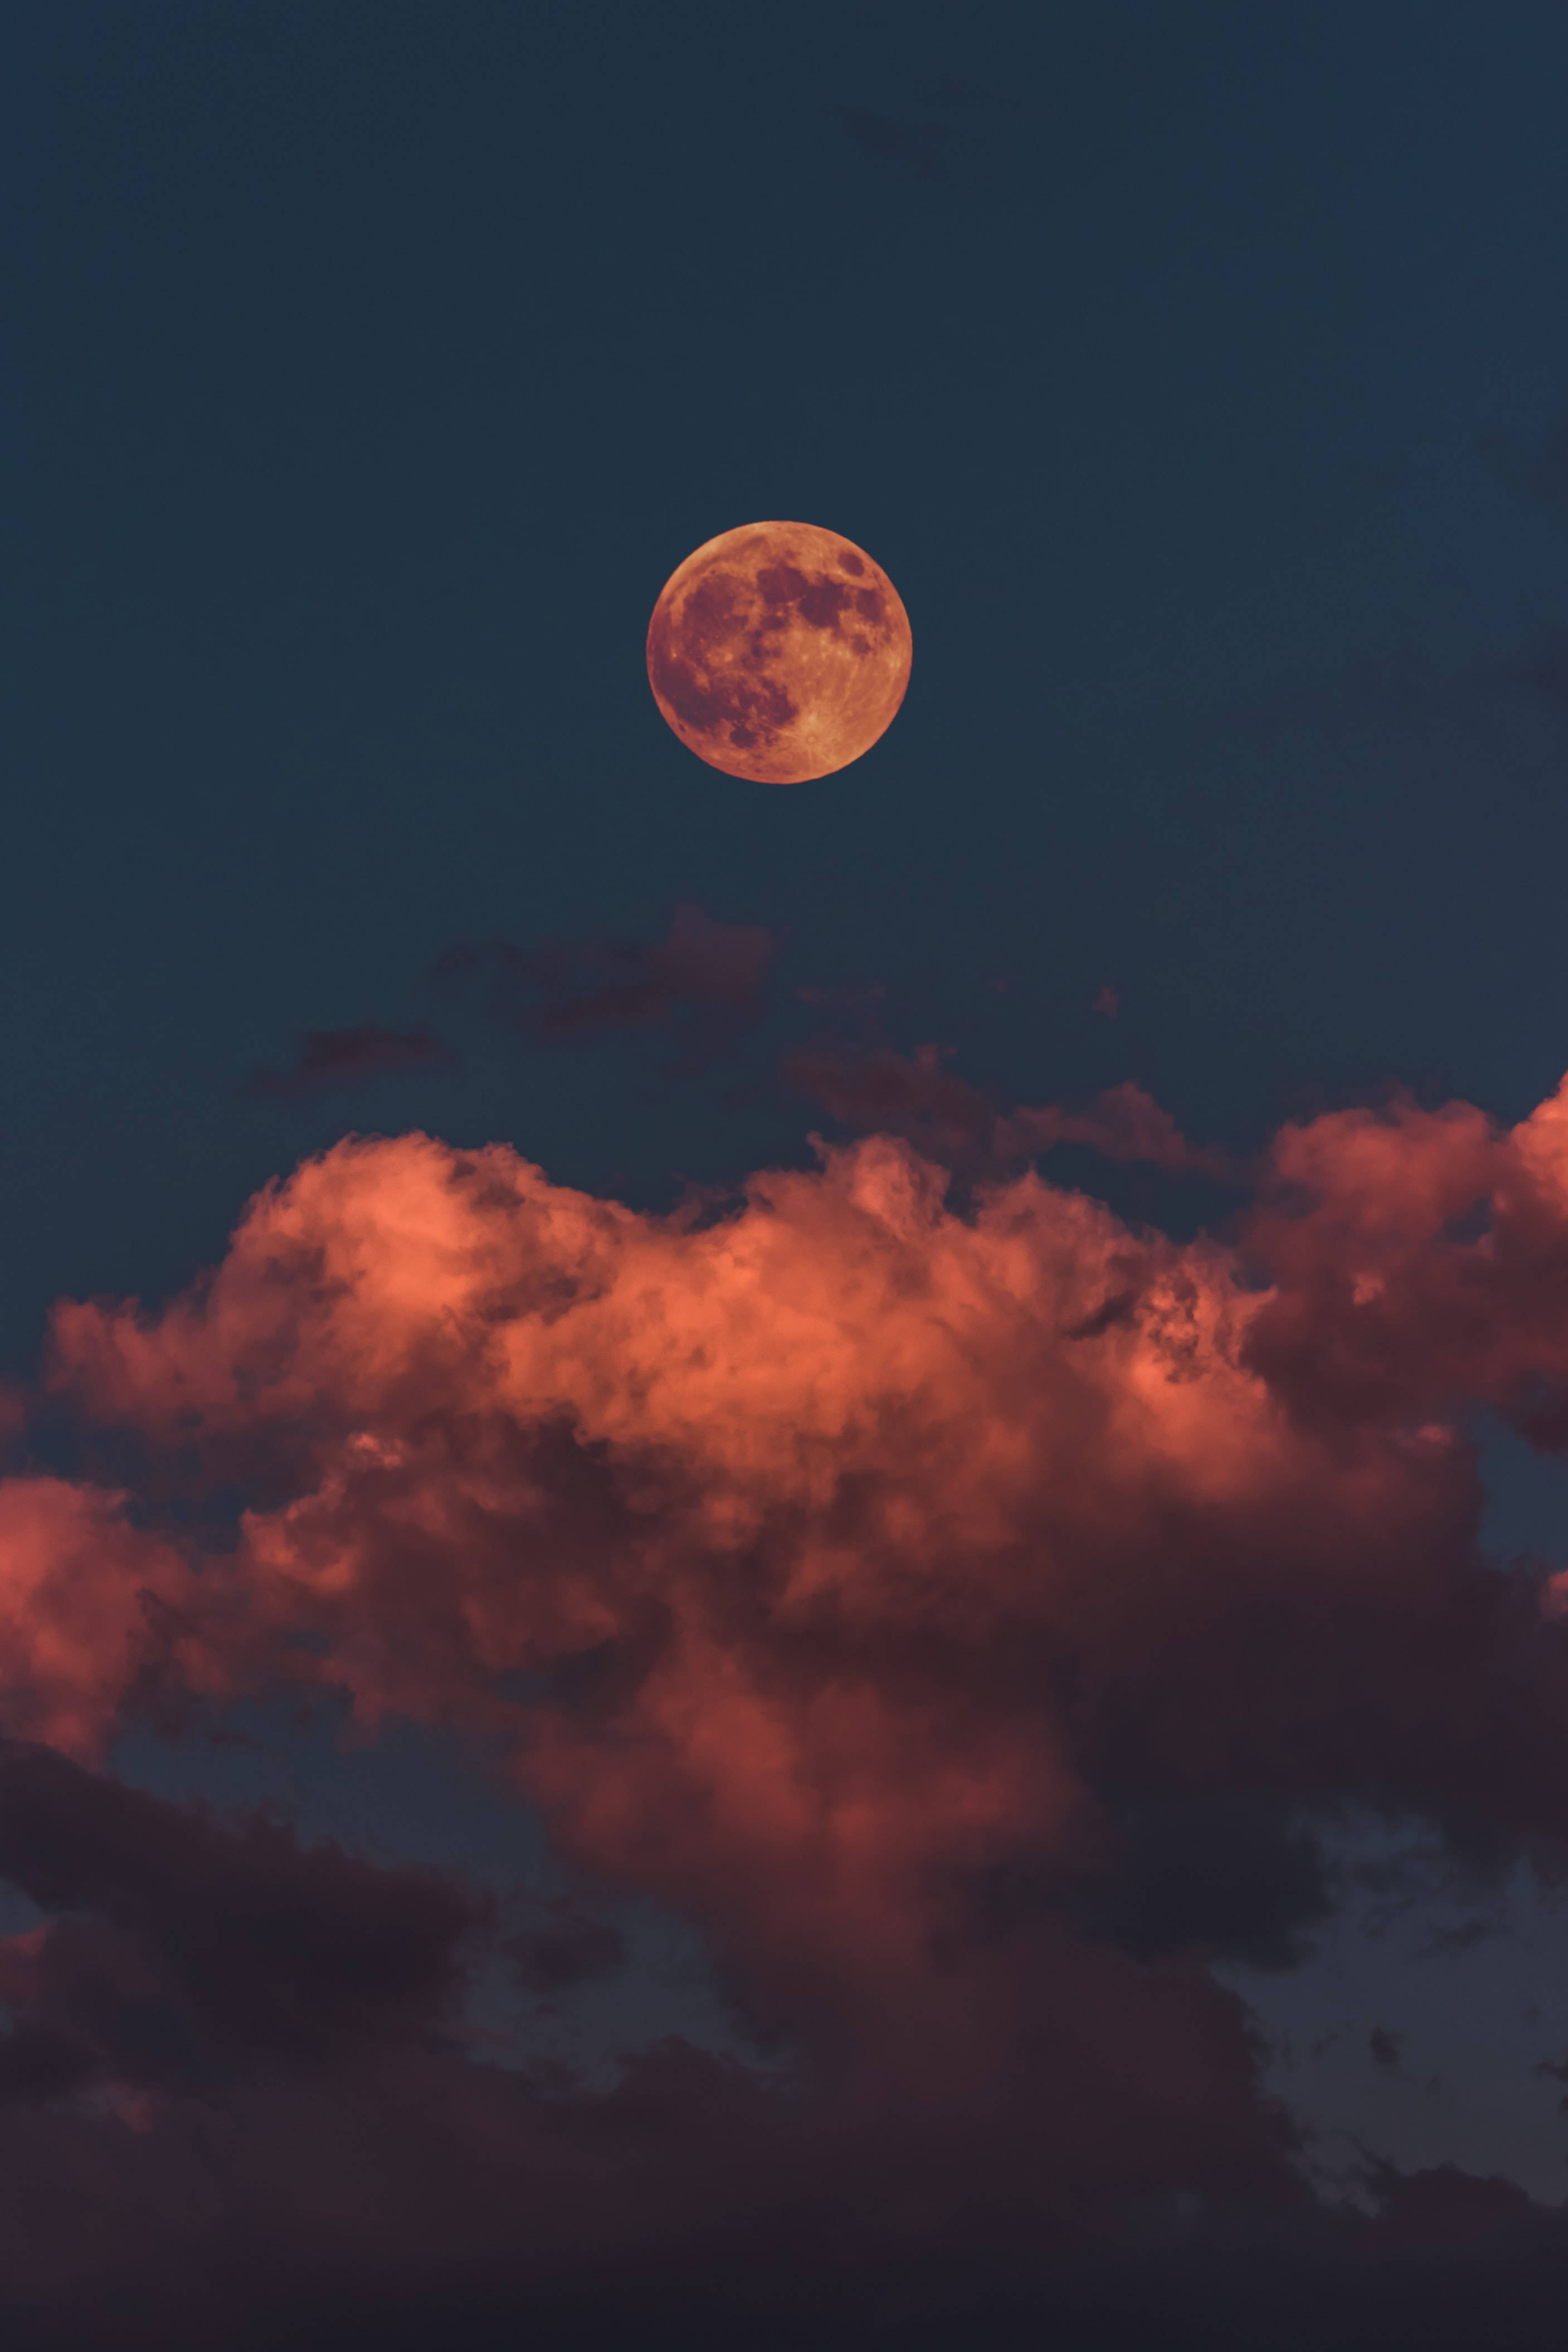 Spectacular Red Moon Glow On A Cloud-strewn Night Sky - 4k Ultra Hd Wallpaper